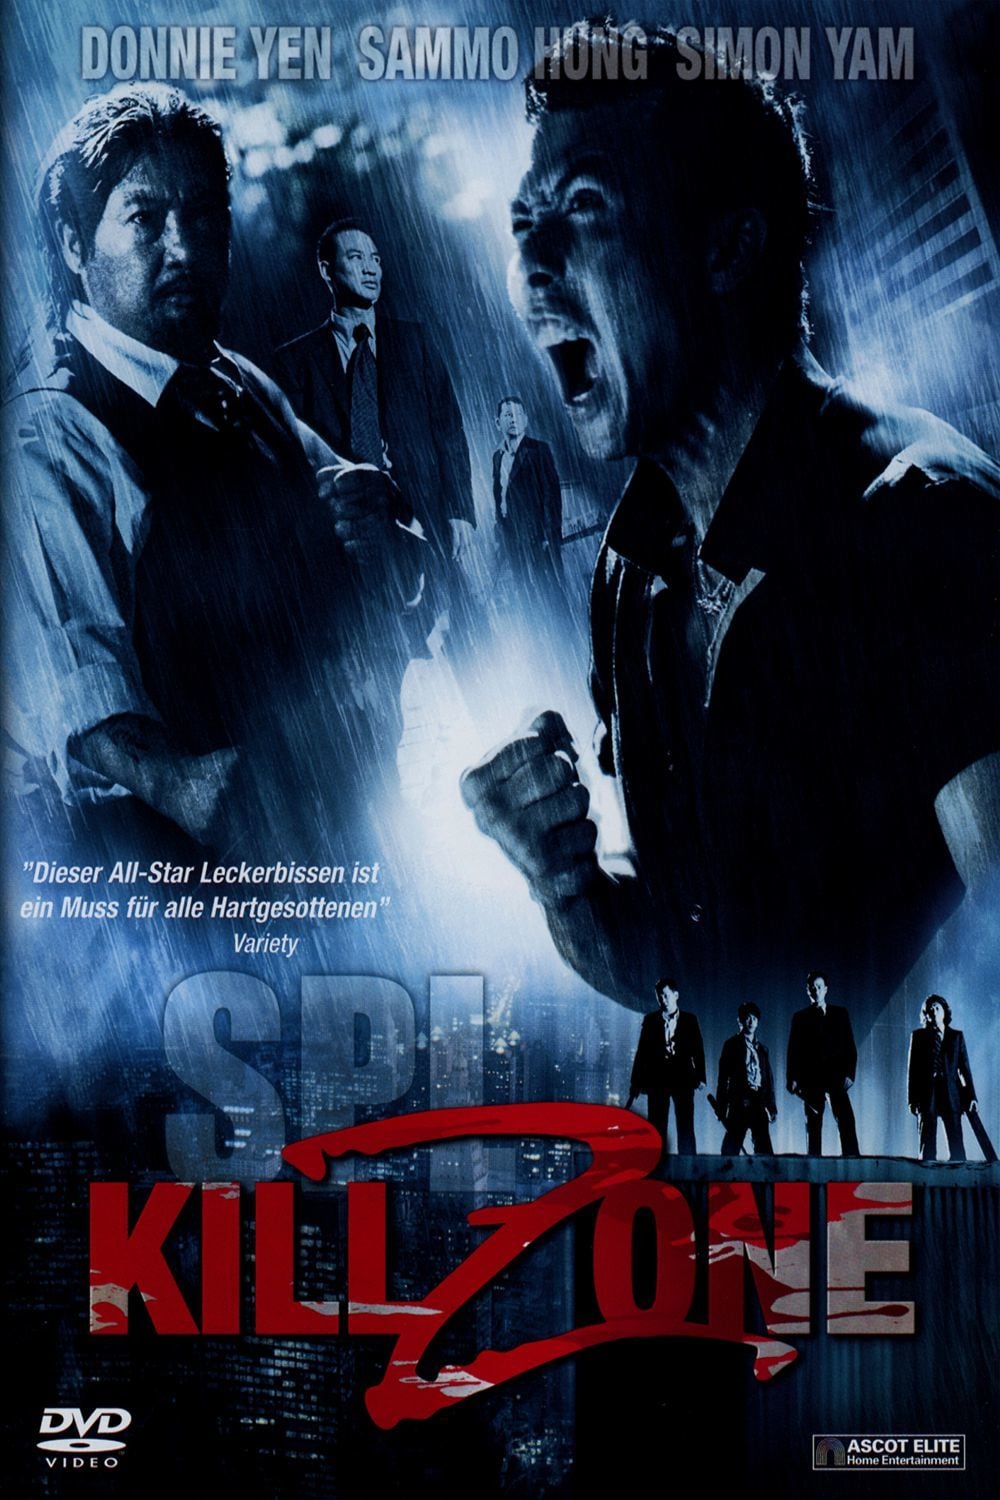 Plakat von "Kill Zone - SPL"